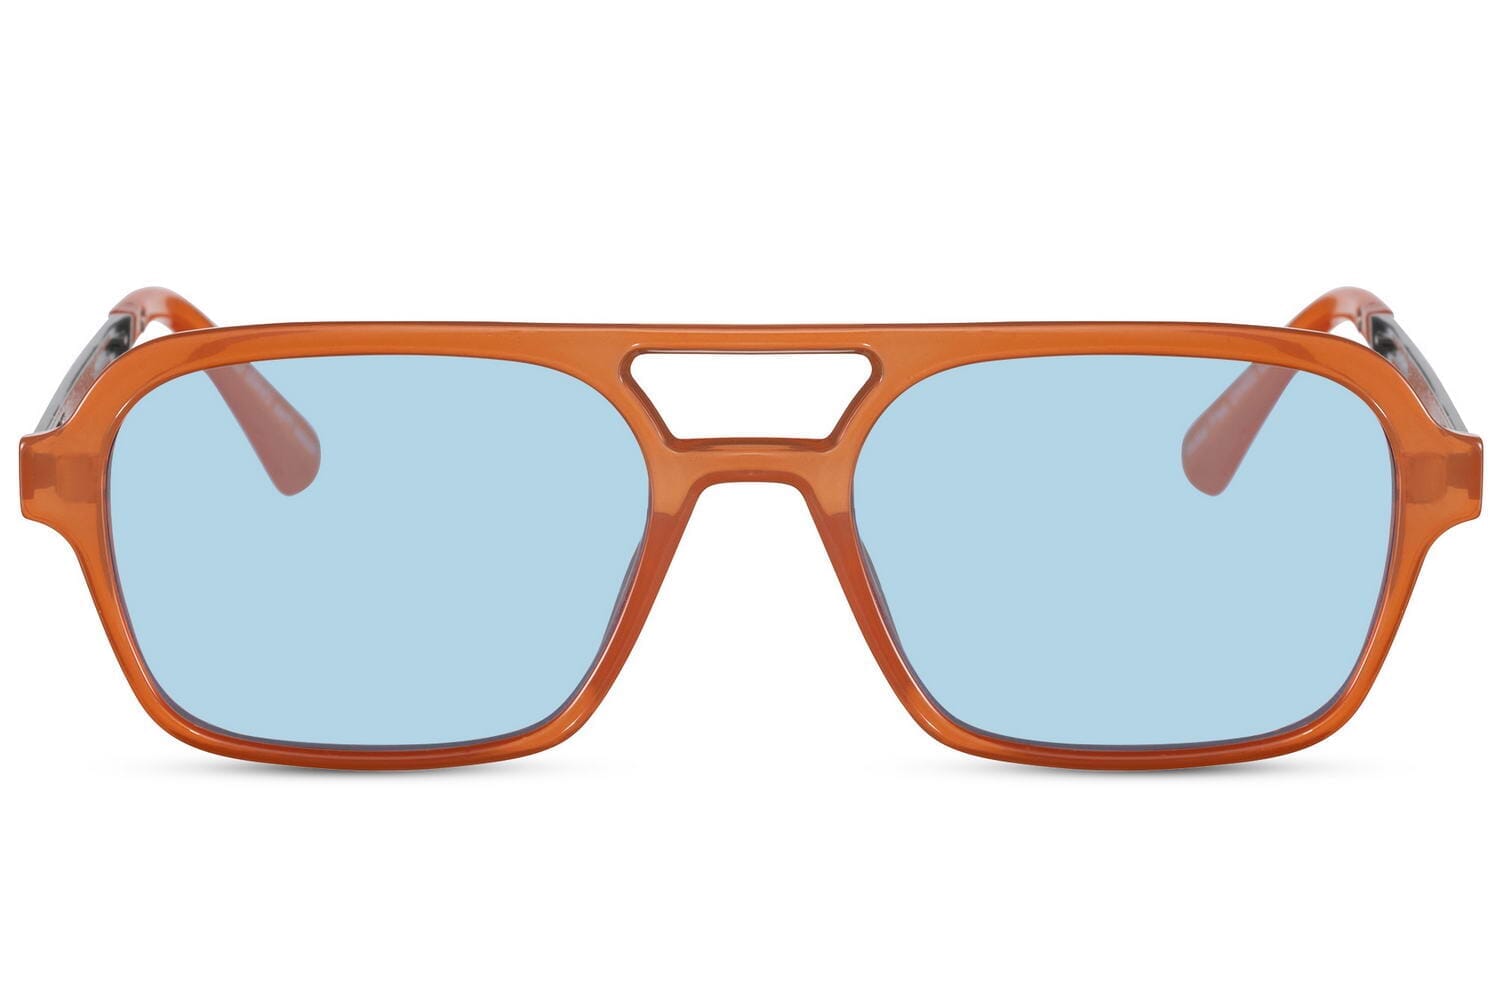 Acetate aviator sunglasses. Blue lenses. Orange frames.